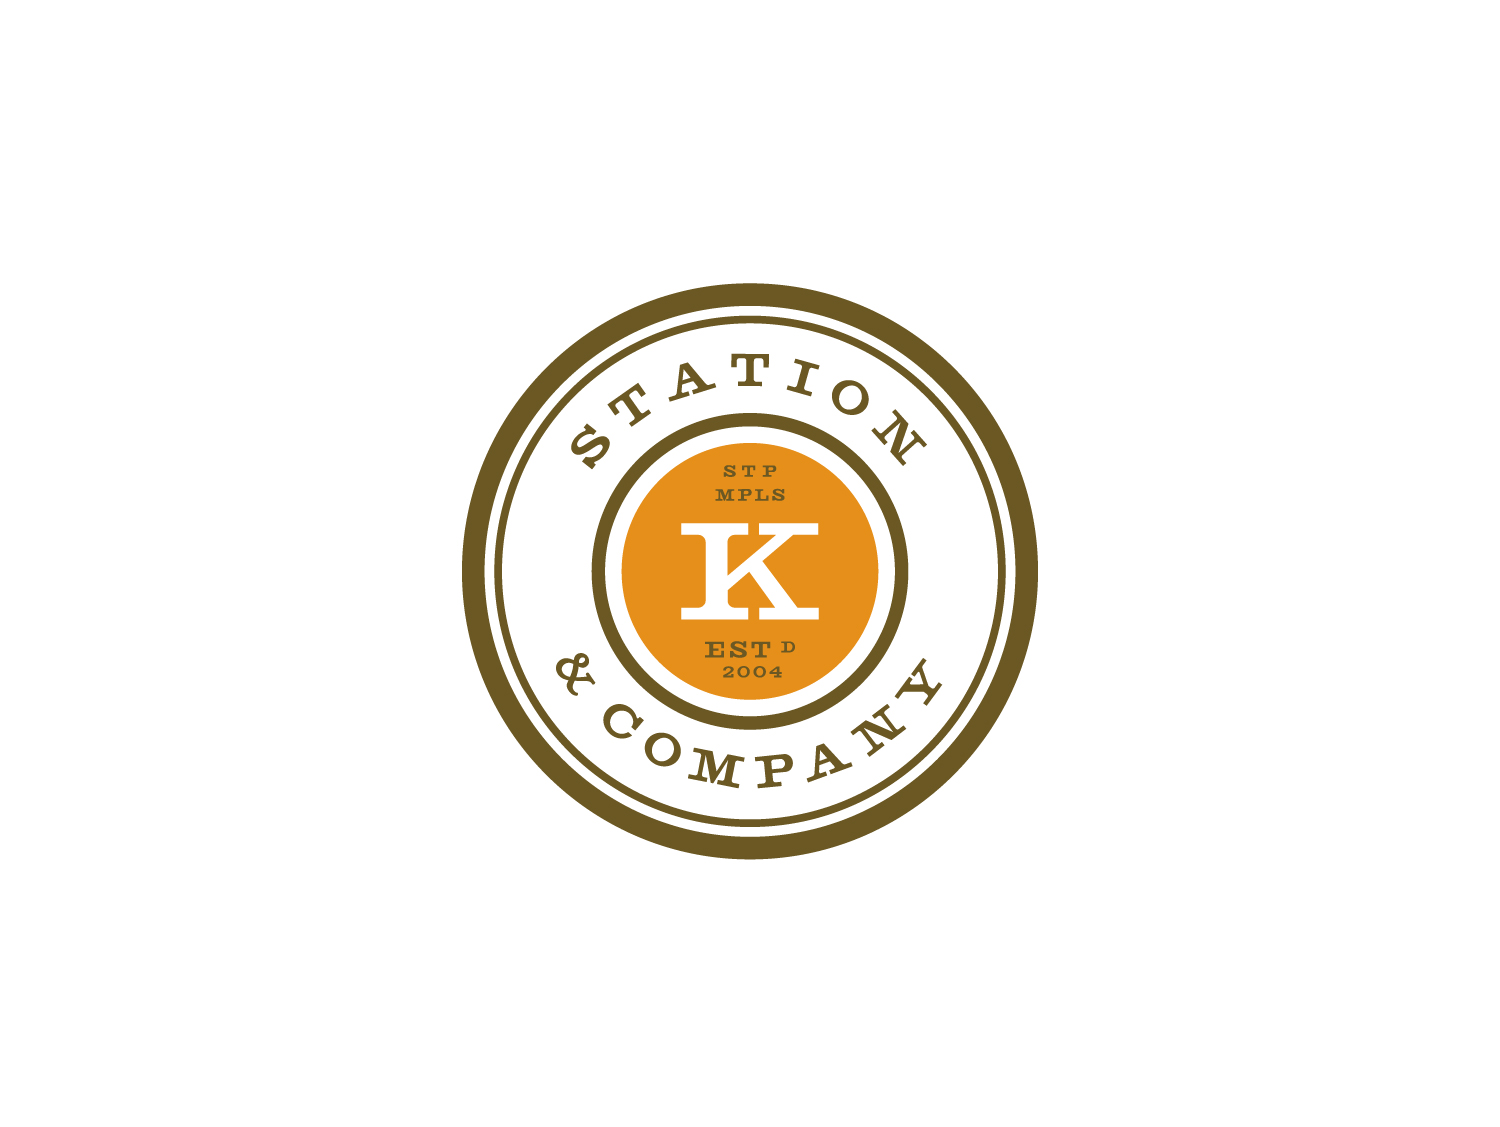 Station-K-and-Co-logo-03.jpg